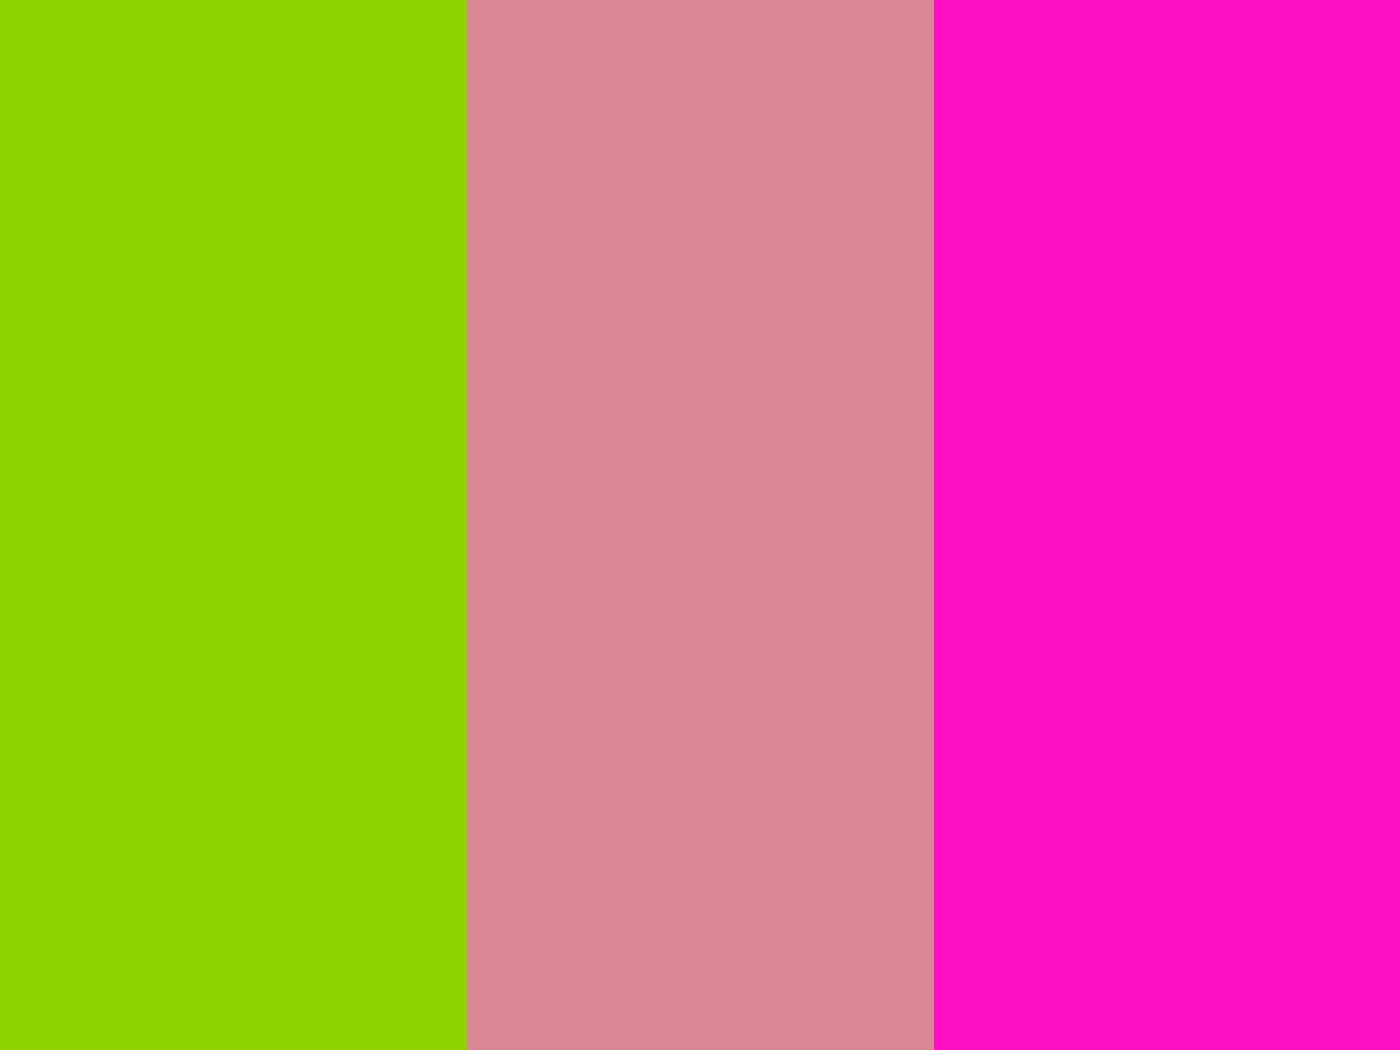 Blush Shocking Pink And Crayola Three Color Background